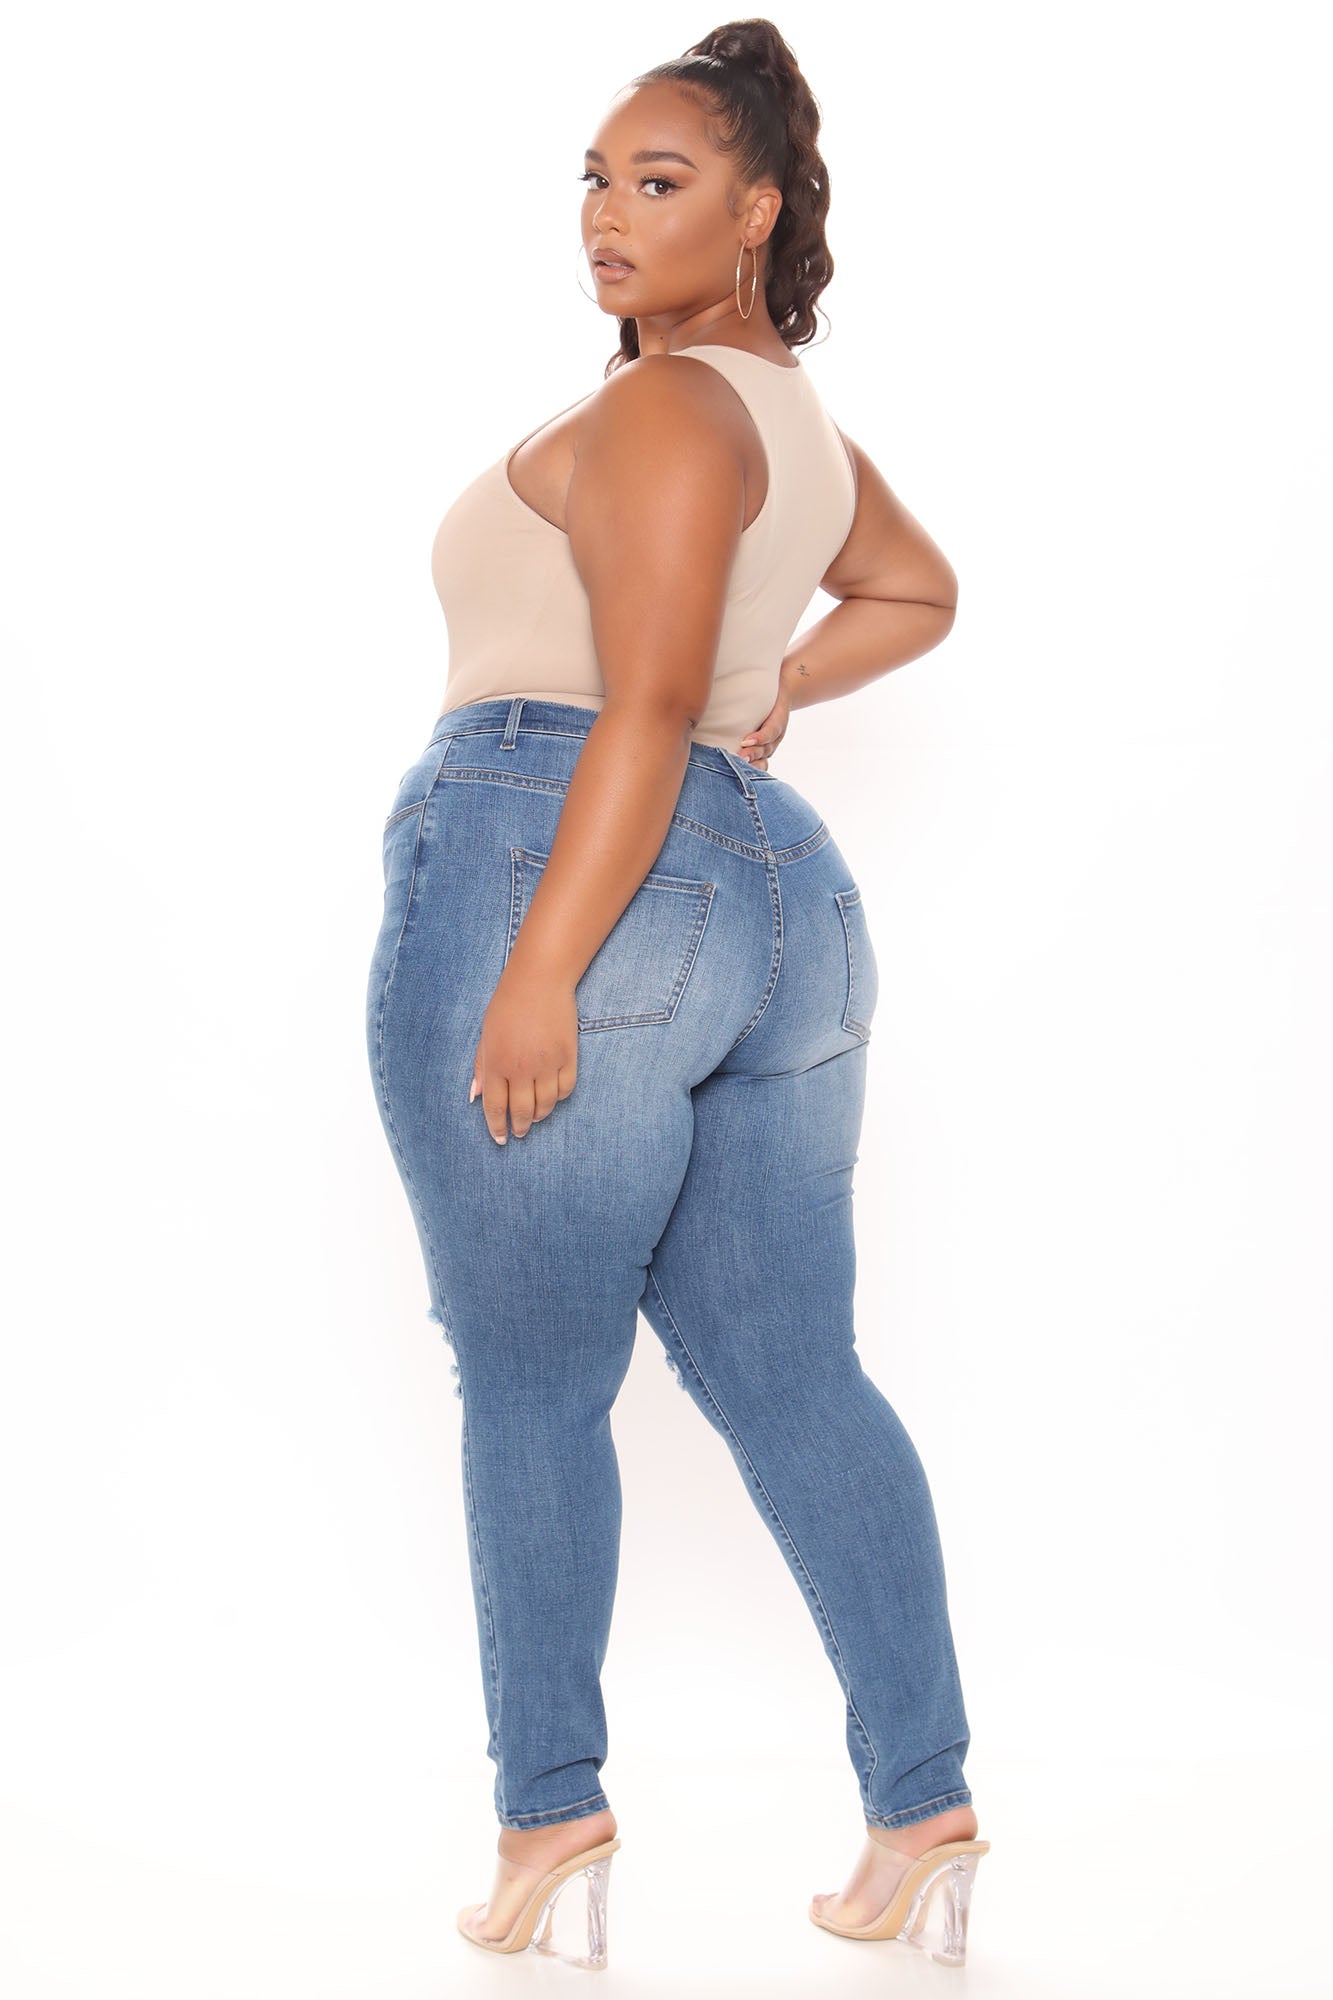 Trisha Ripped High Rise Skinny Jeans - Medium Blue Wash